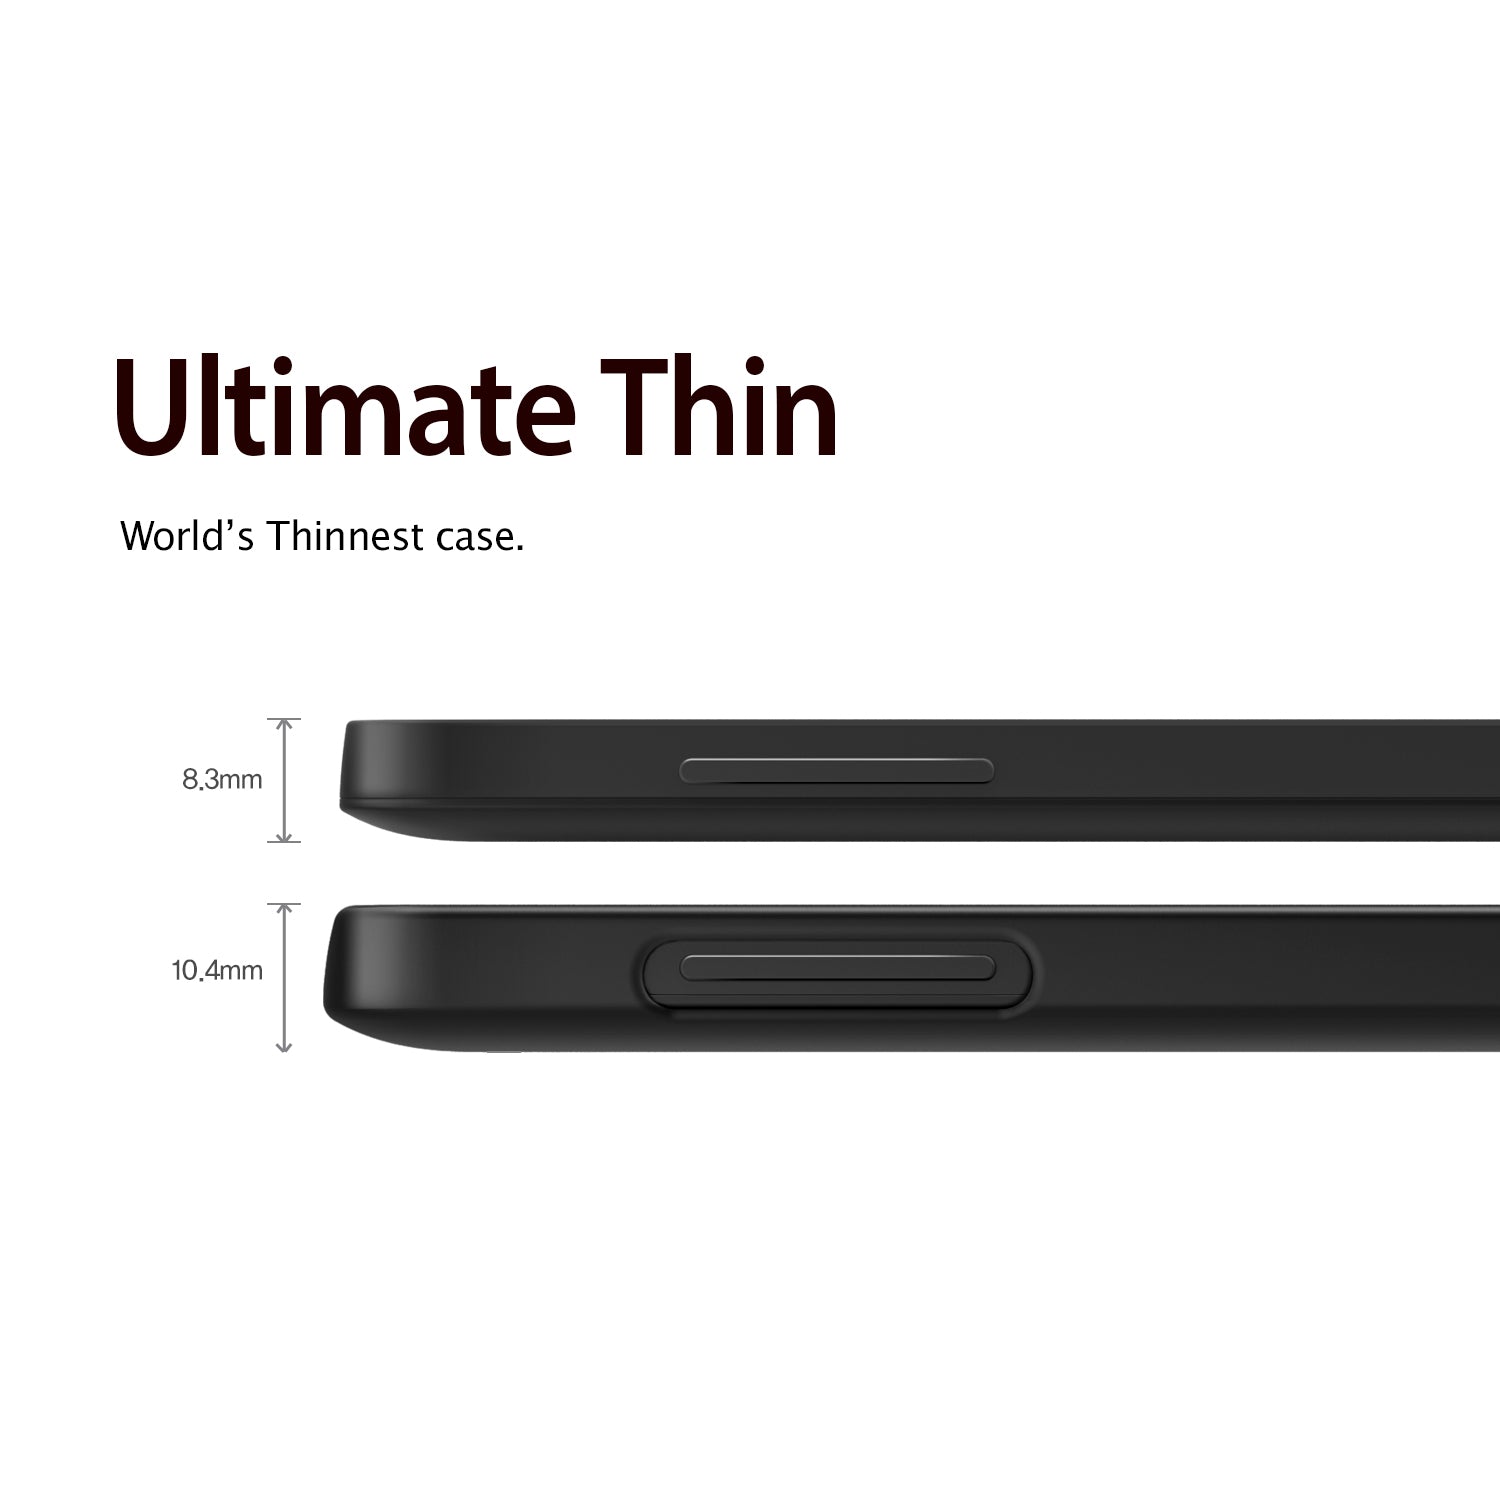 ringke slim thin lightweight hard pc case cover for google nexus 5 main ultimate thin